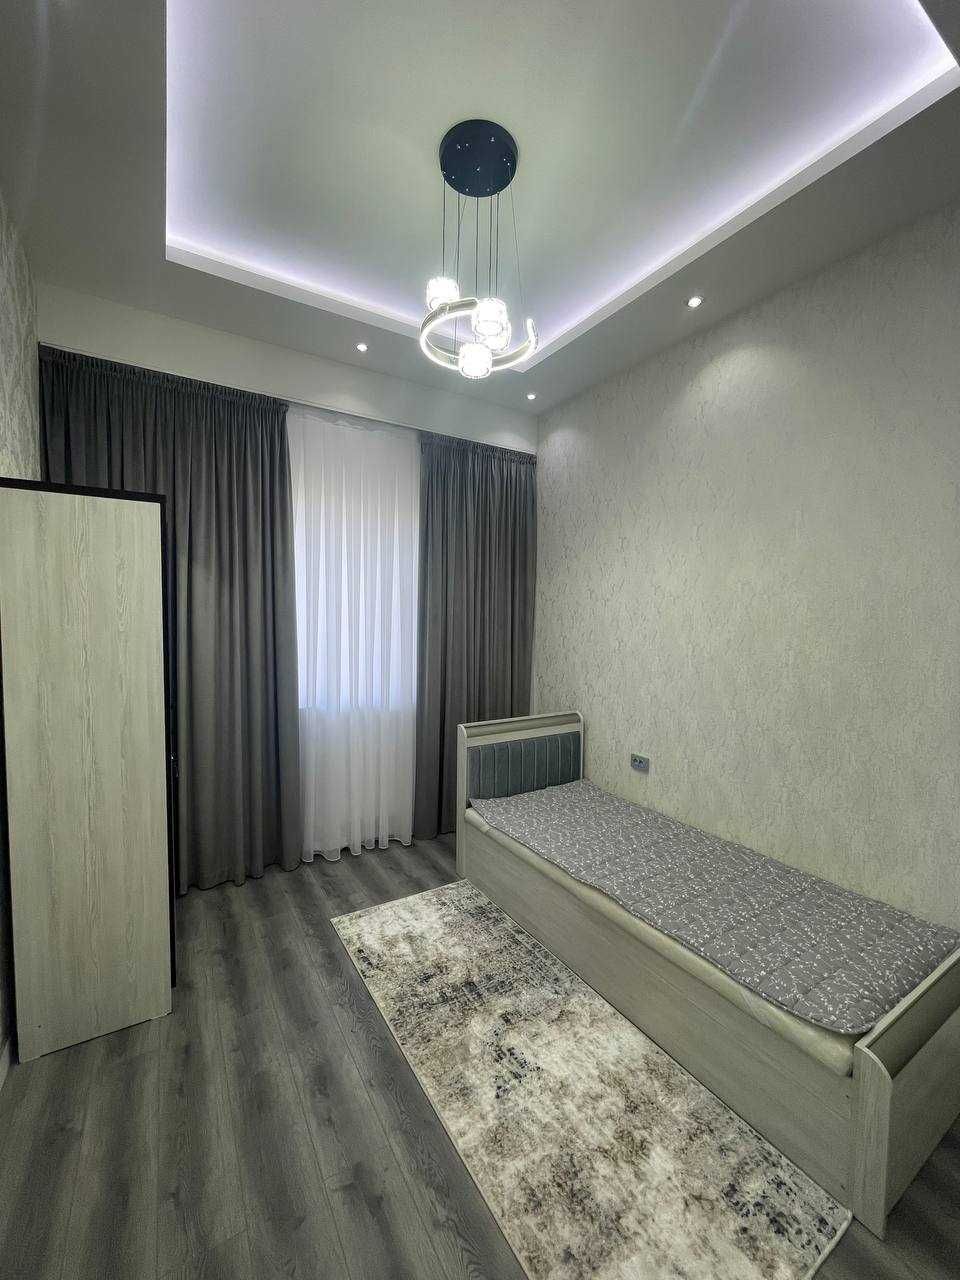 Сдается комфортная квартира в ЖК Ташкент Сити Гарденс!